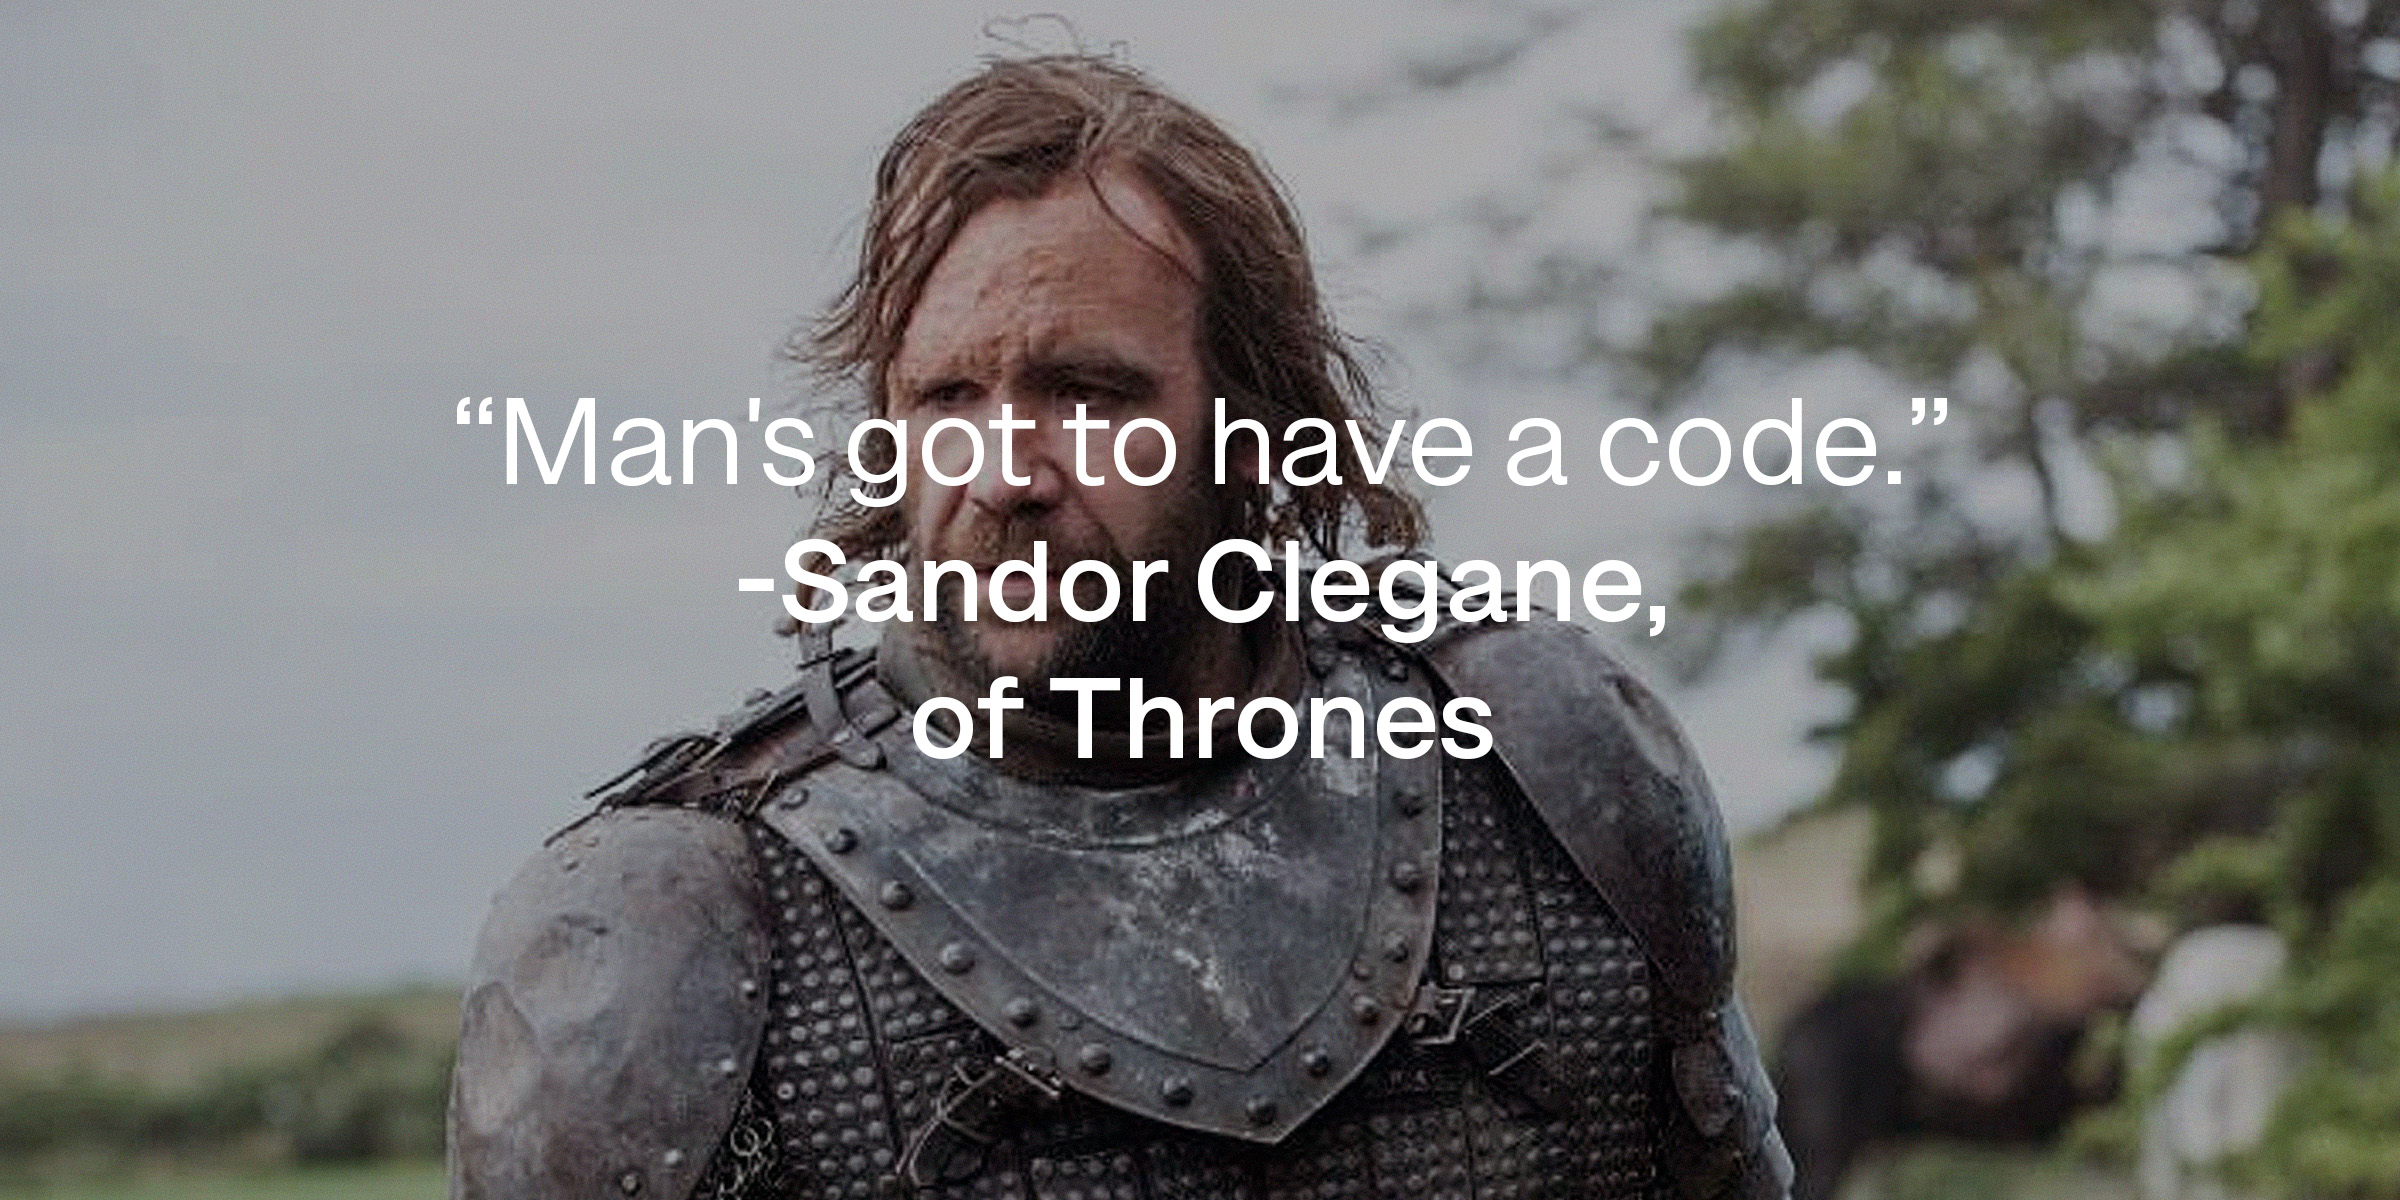 Sandor Clegane's quote: "Man's got to have a code." | Source: facebook.com/GameOfThrones